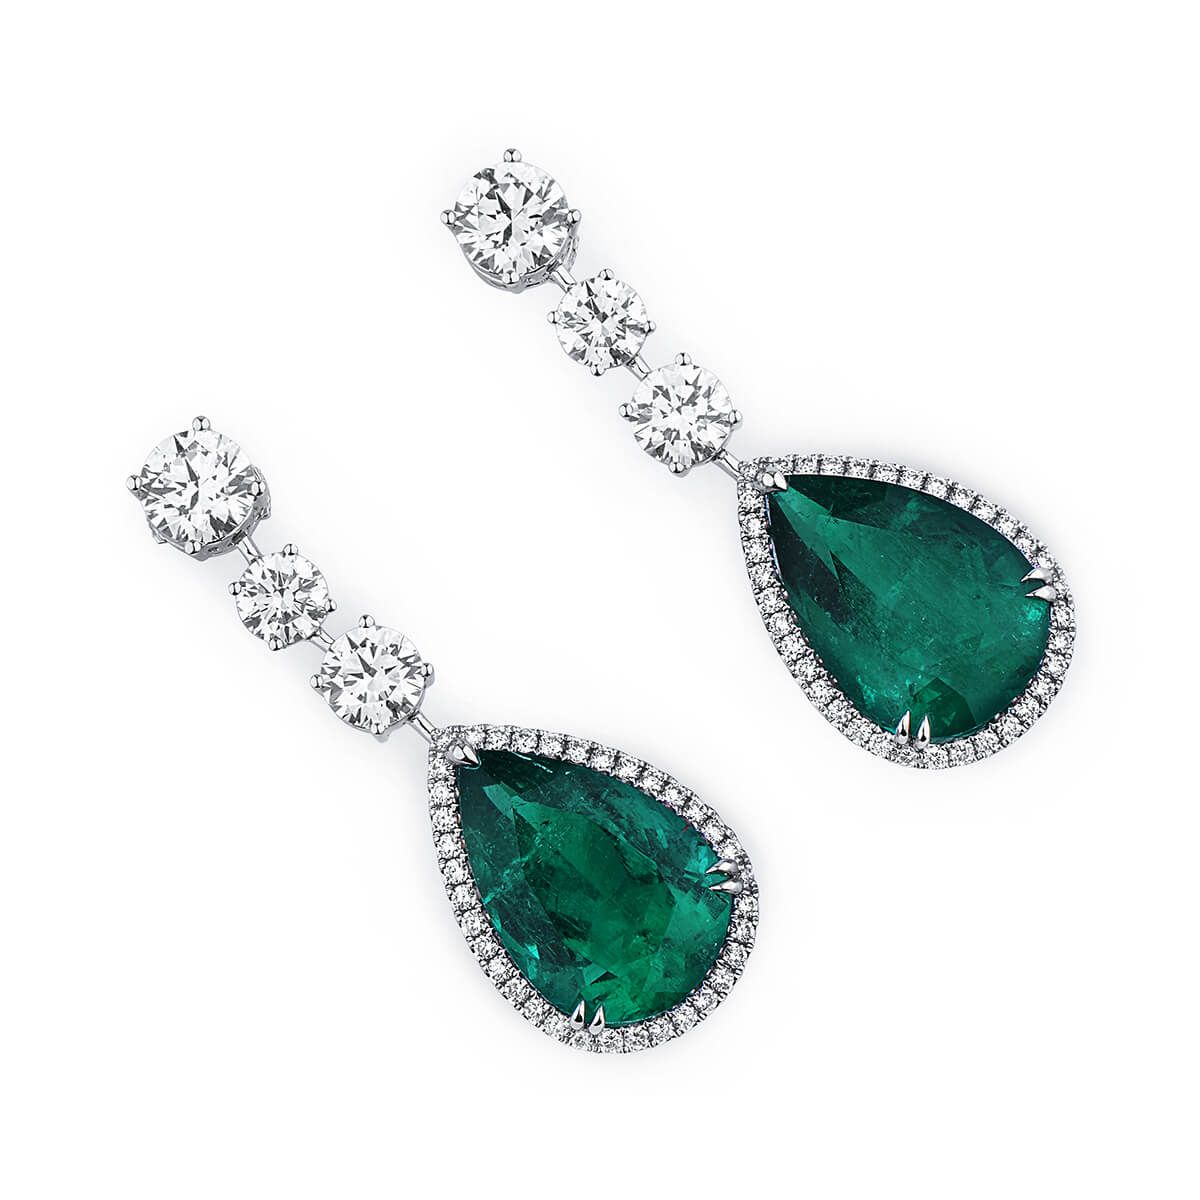 Natural Vivid Green Emerald Earrings, 20.75 Ct. (25.93 Ct. TW), GRS Certified, JCEG05430873, Unheated